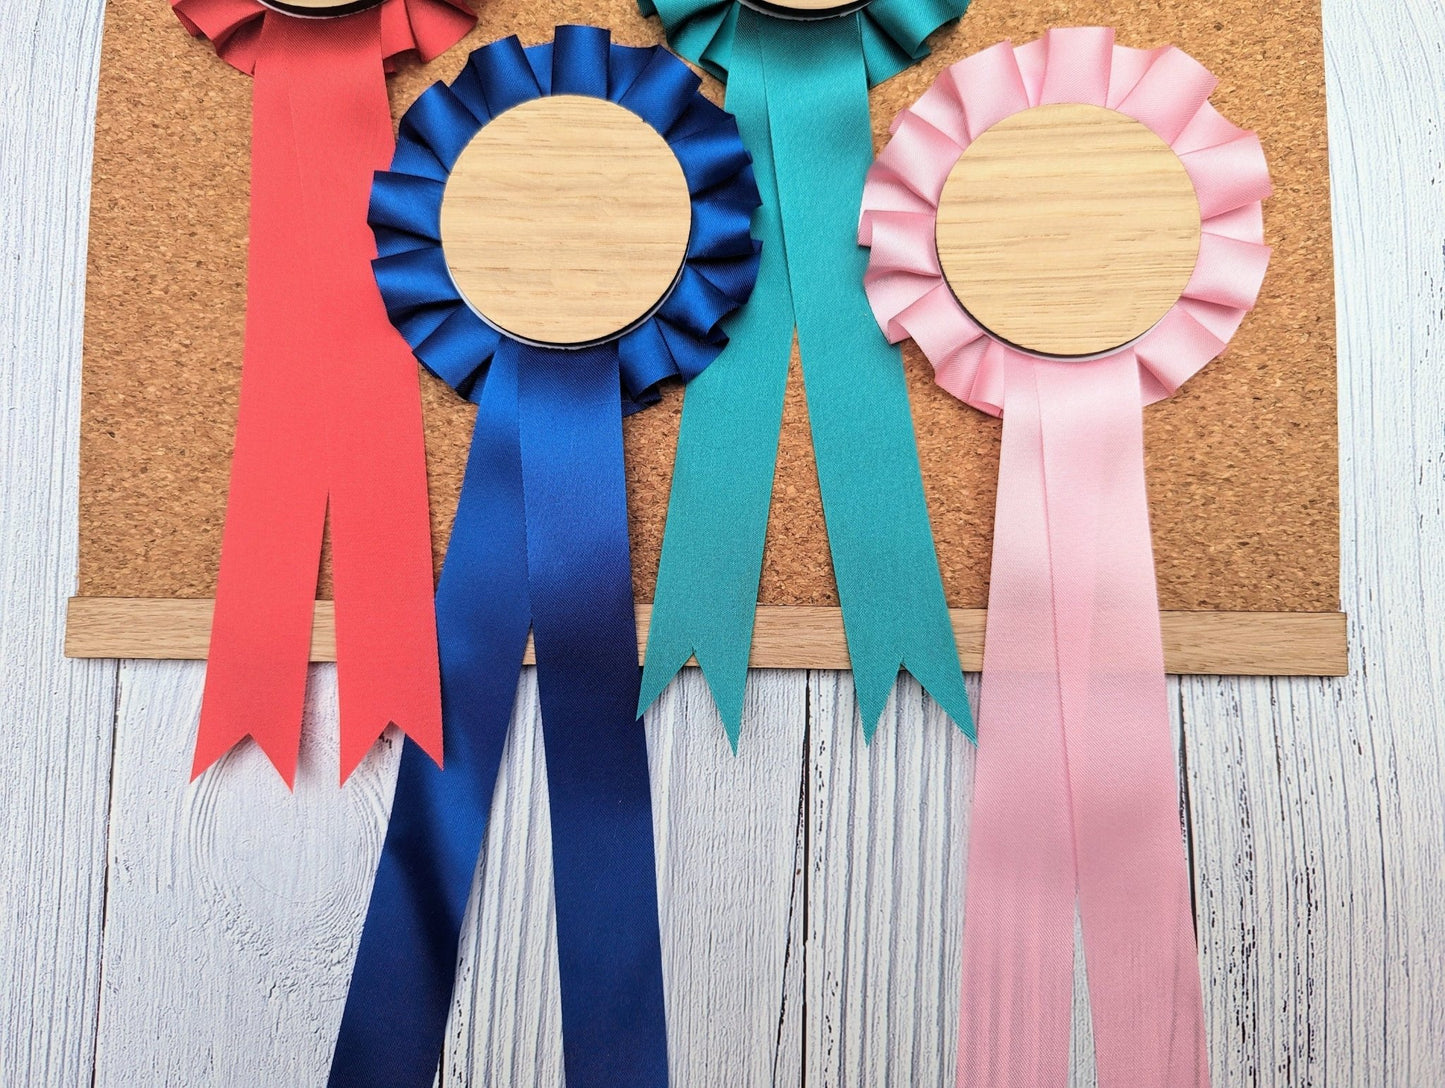 Personalised Staffordshire Bull Terrier Rosette Holder - Custom Dog Show Award Display - Handcrafted Wooden Keepsake for Pet Lovers - CherryGroveCraft